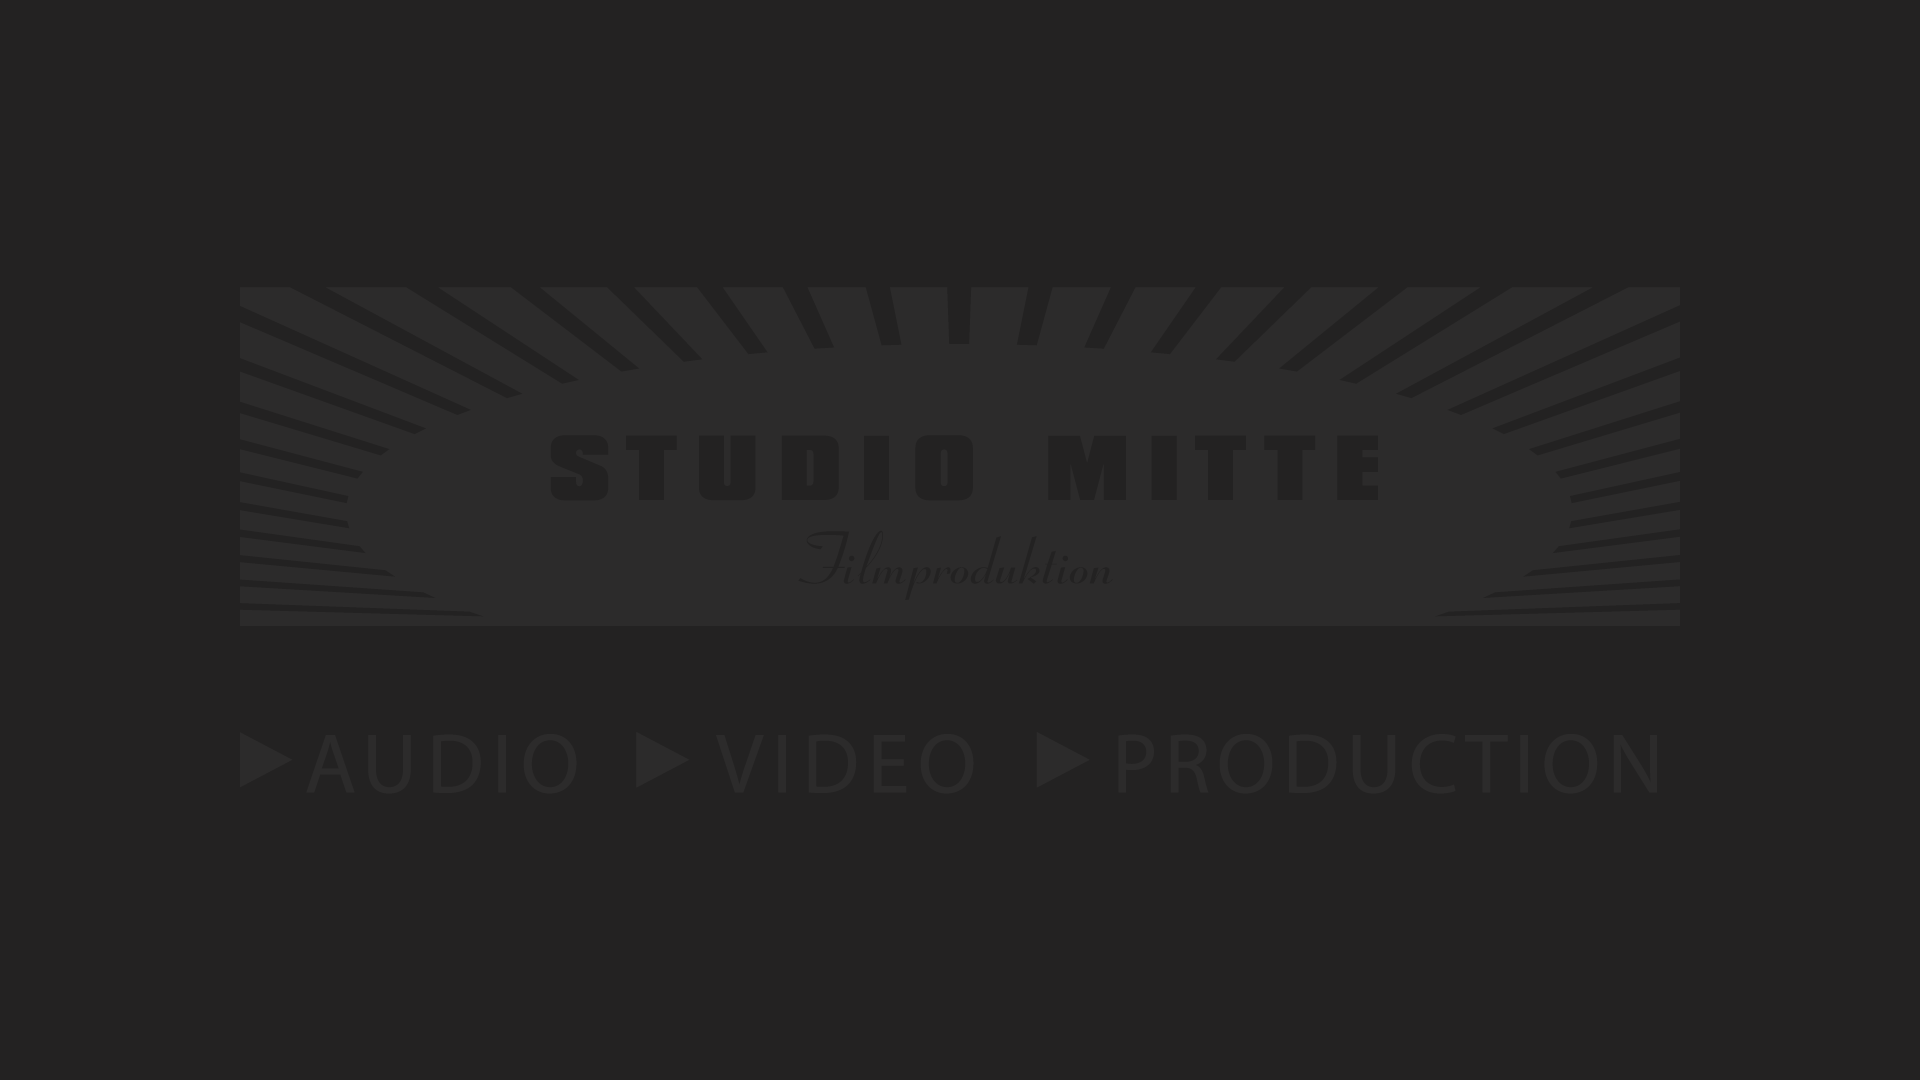 Studio Mitte - no production image